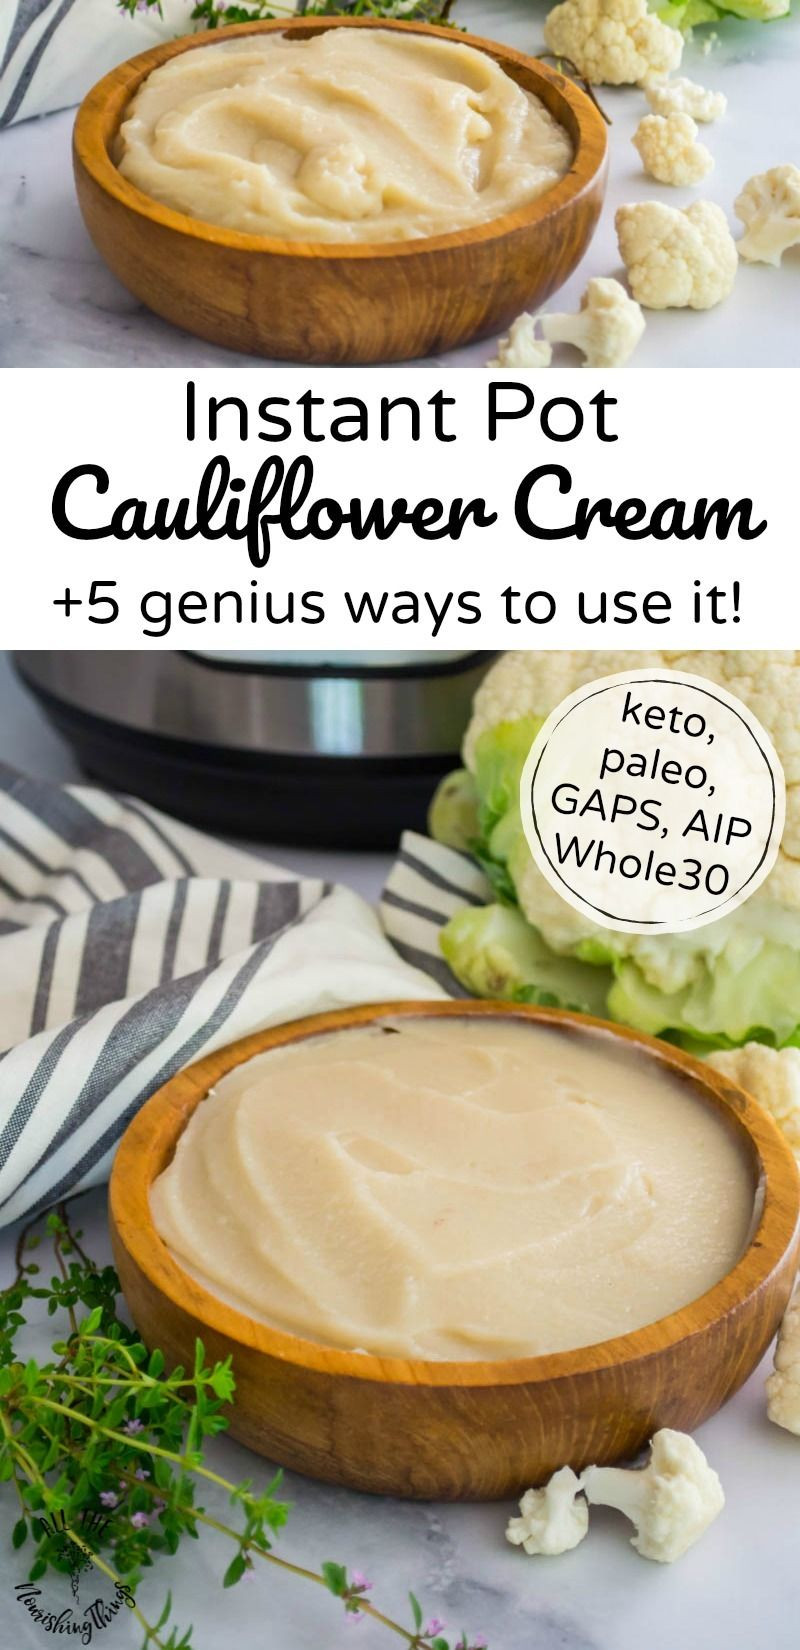 Dairy Free Keto Instant Pot Recipes
 Instant Pot Cauliflower "Cream" dairy free paleo